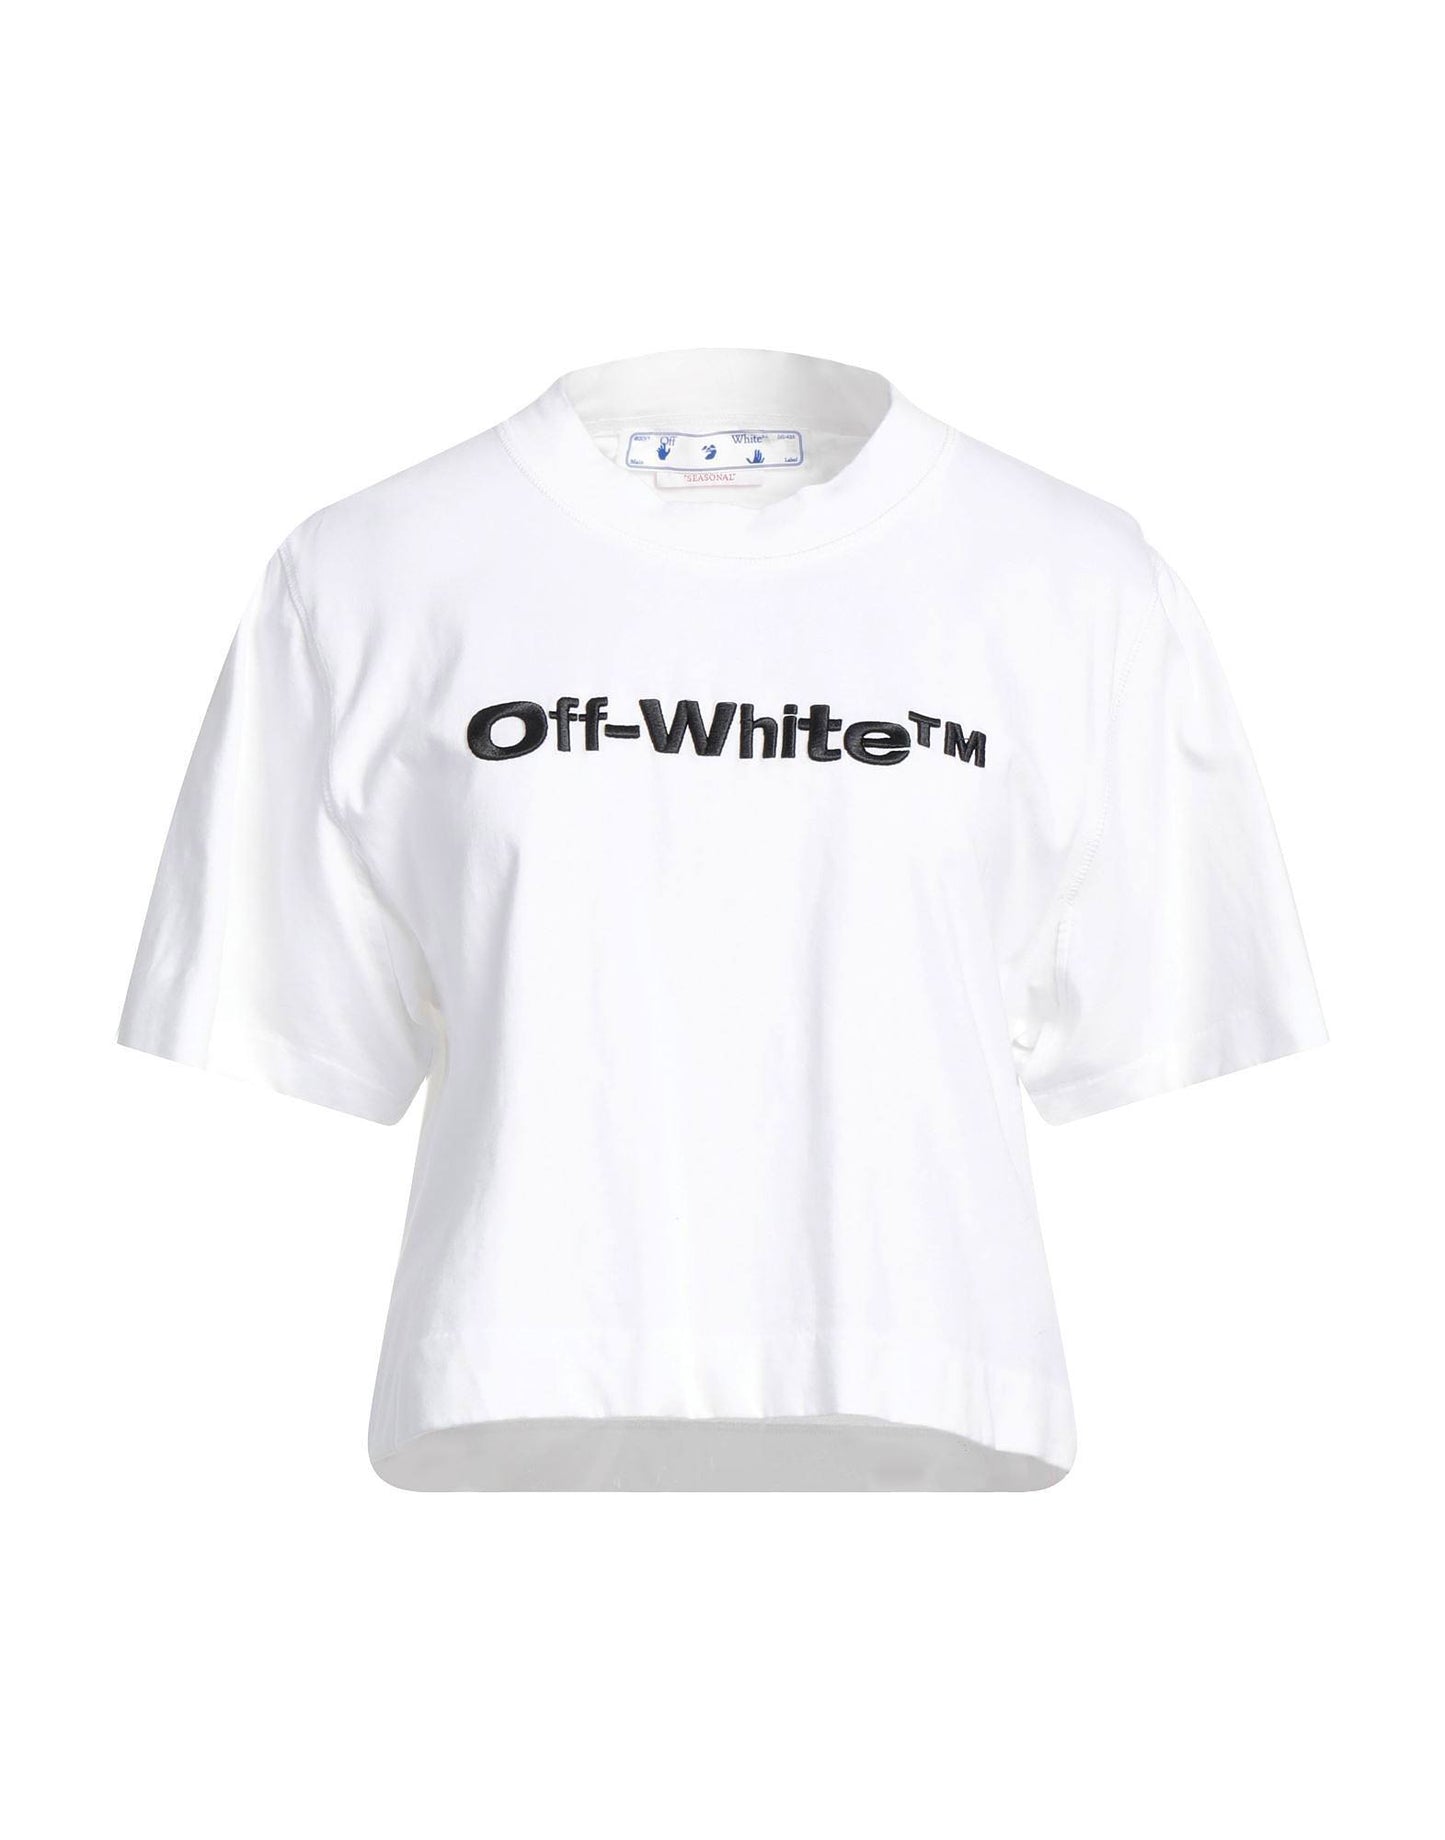 Off-White™ T-shirts